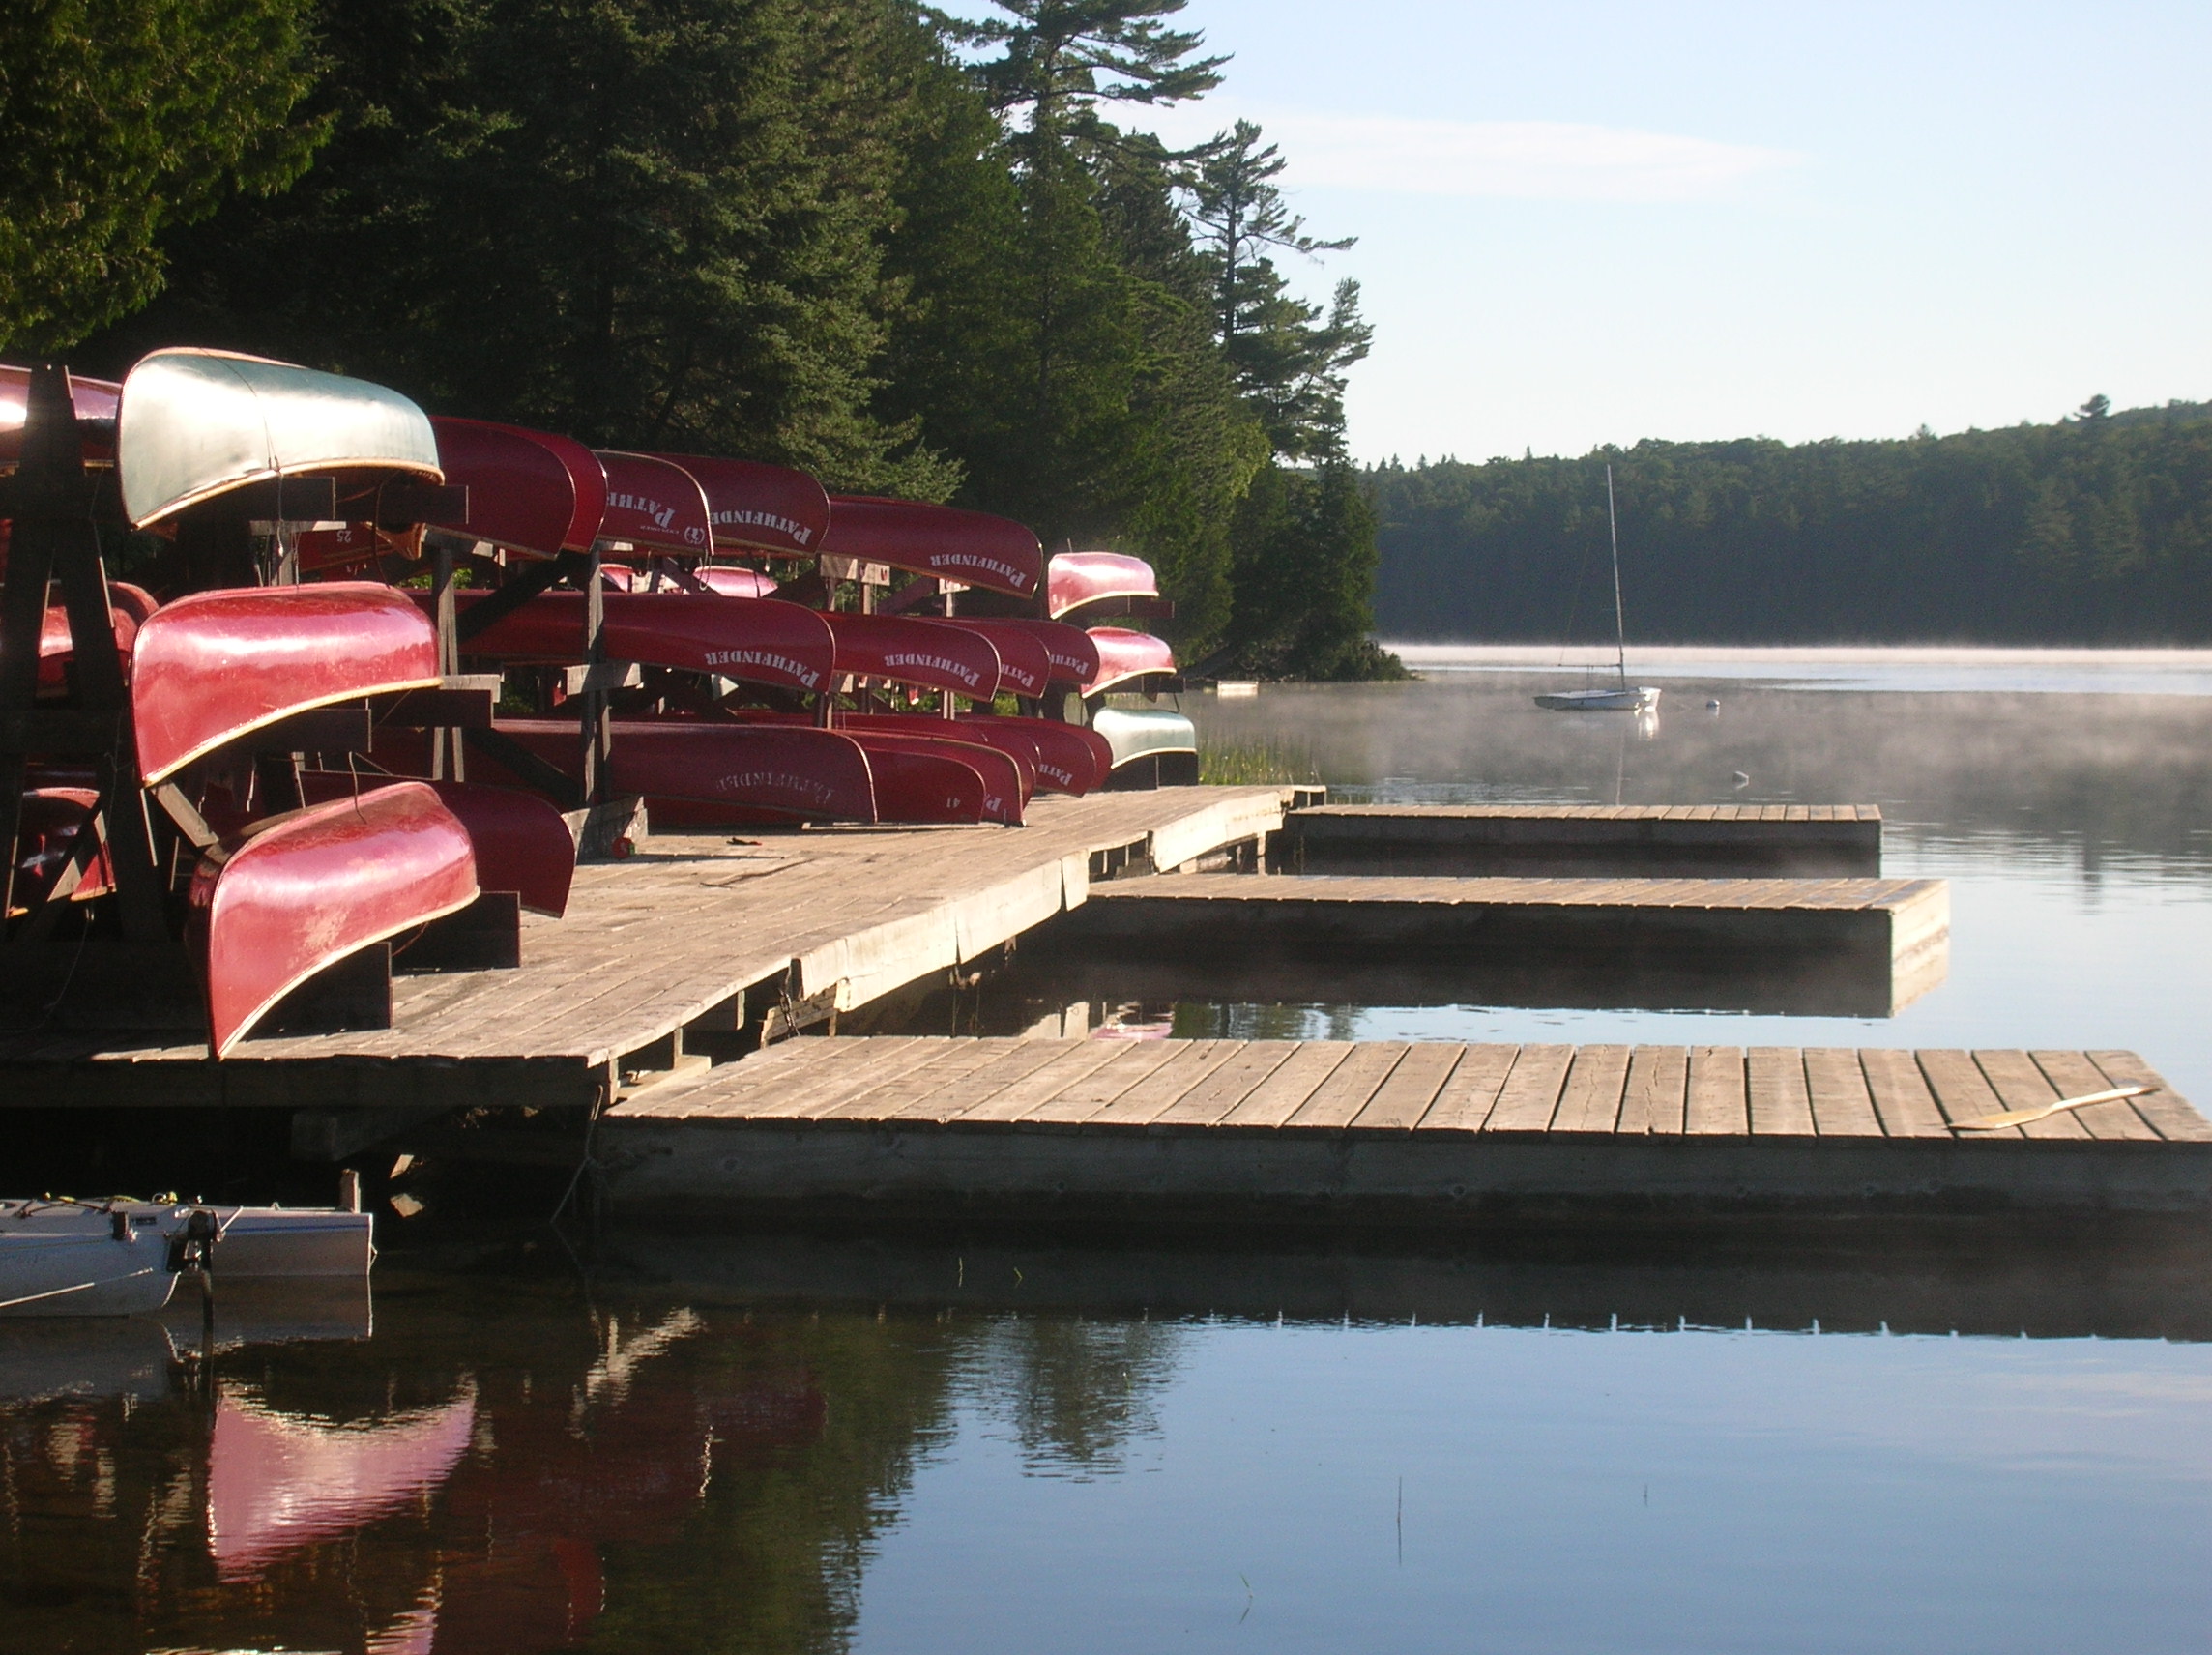 File:Pathfinder Canoe Dock.JPG - Wikimedia Commons